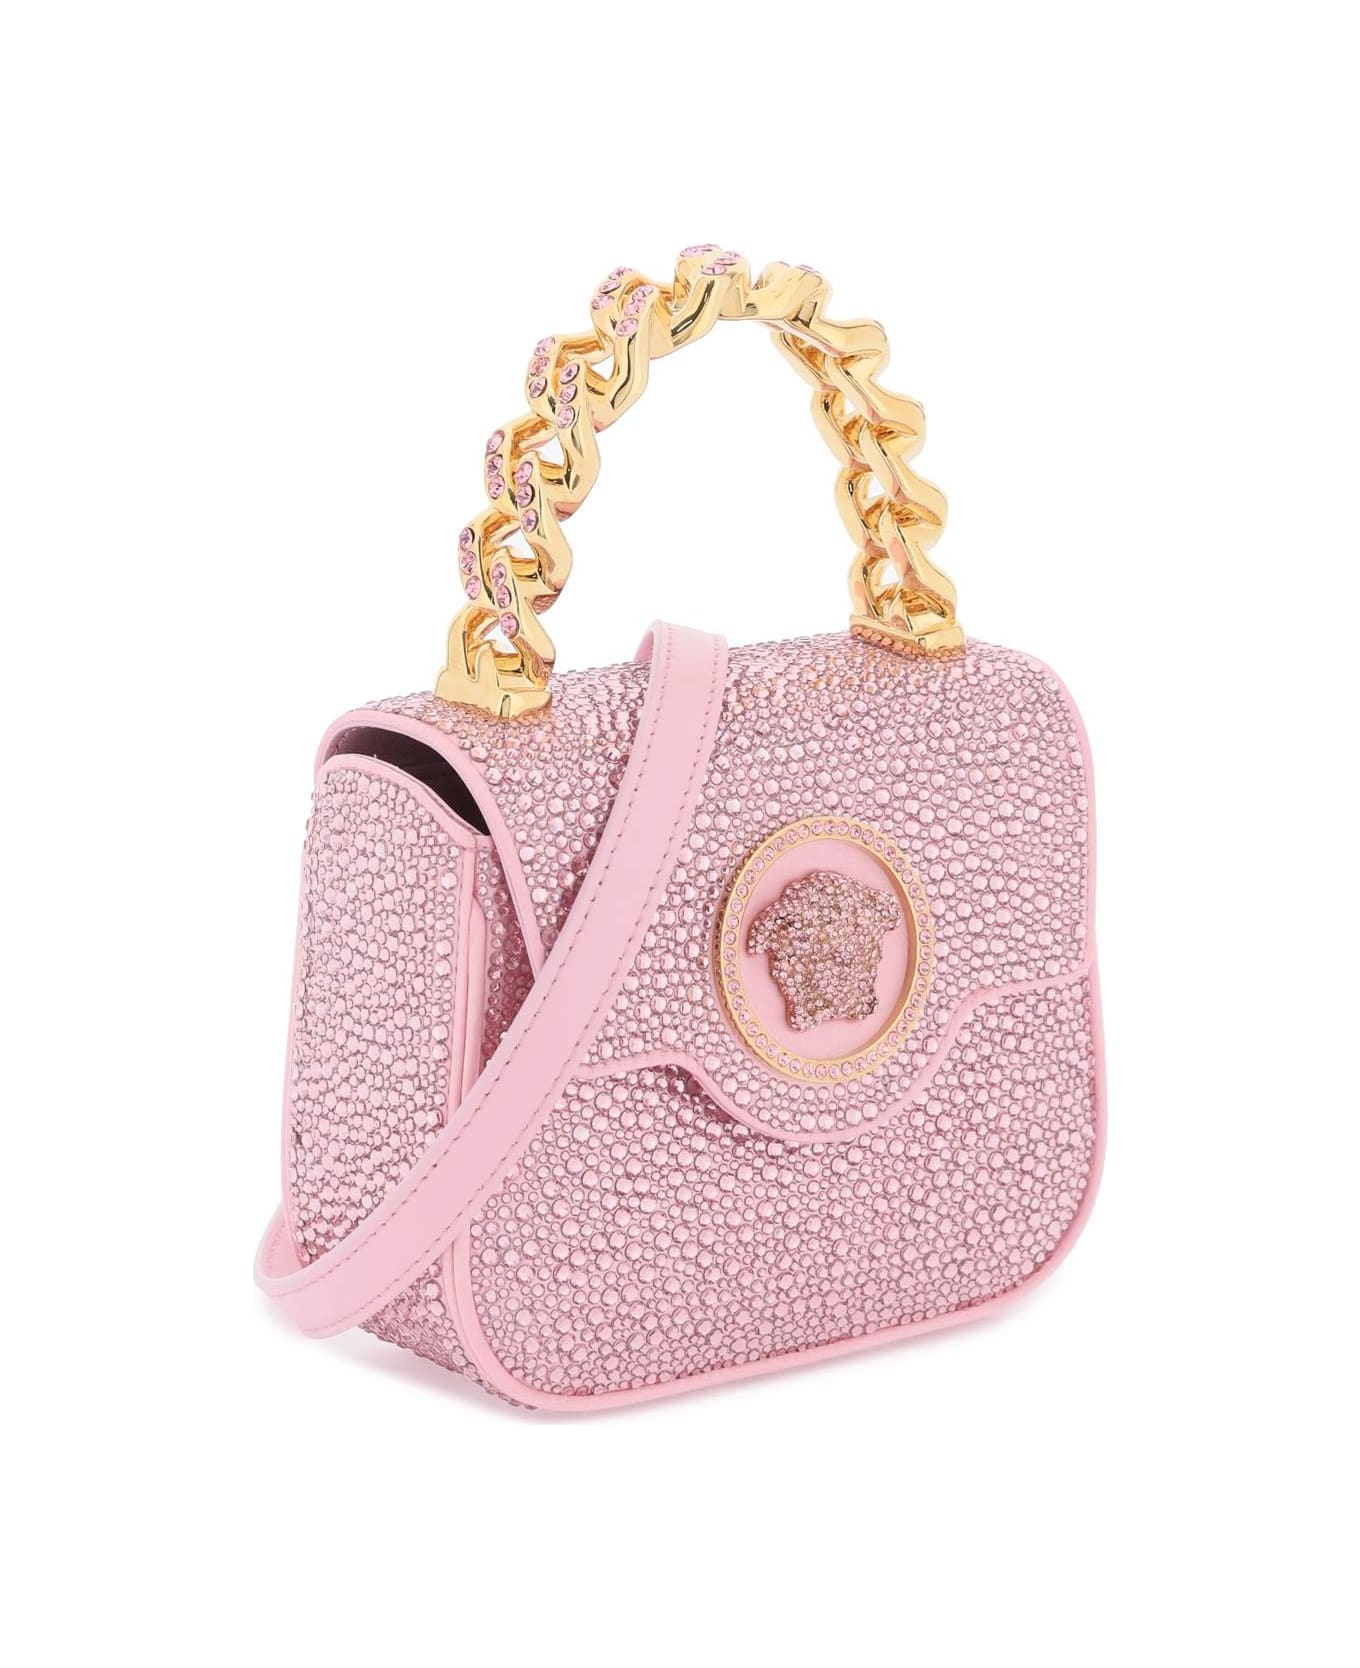 Versace La Medusa Handbag With Crystals - PALE PINK VERSACE GOLD (Pink) トートバッグ